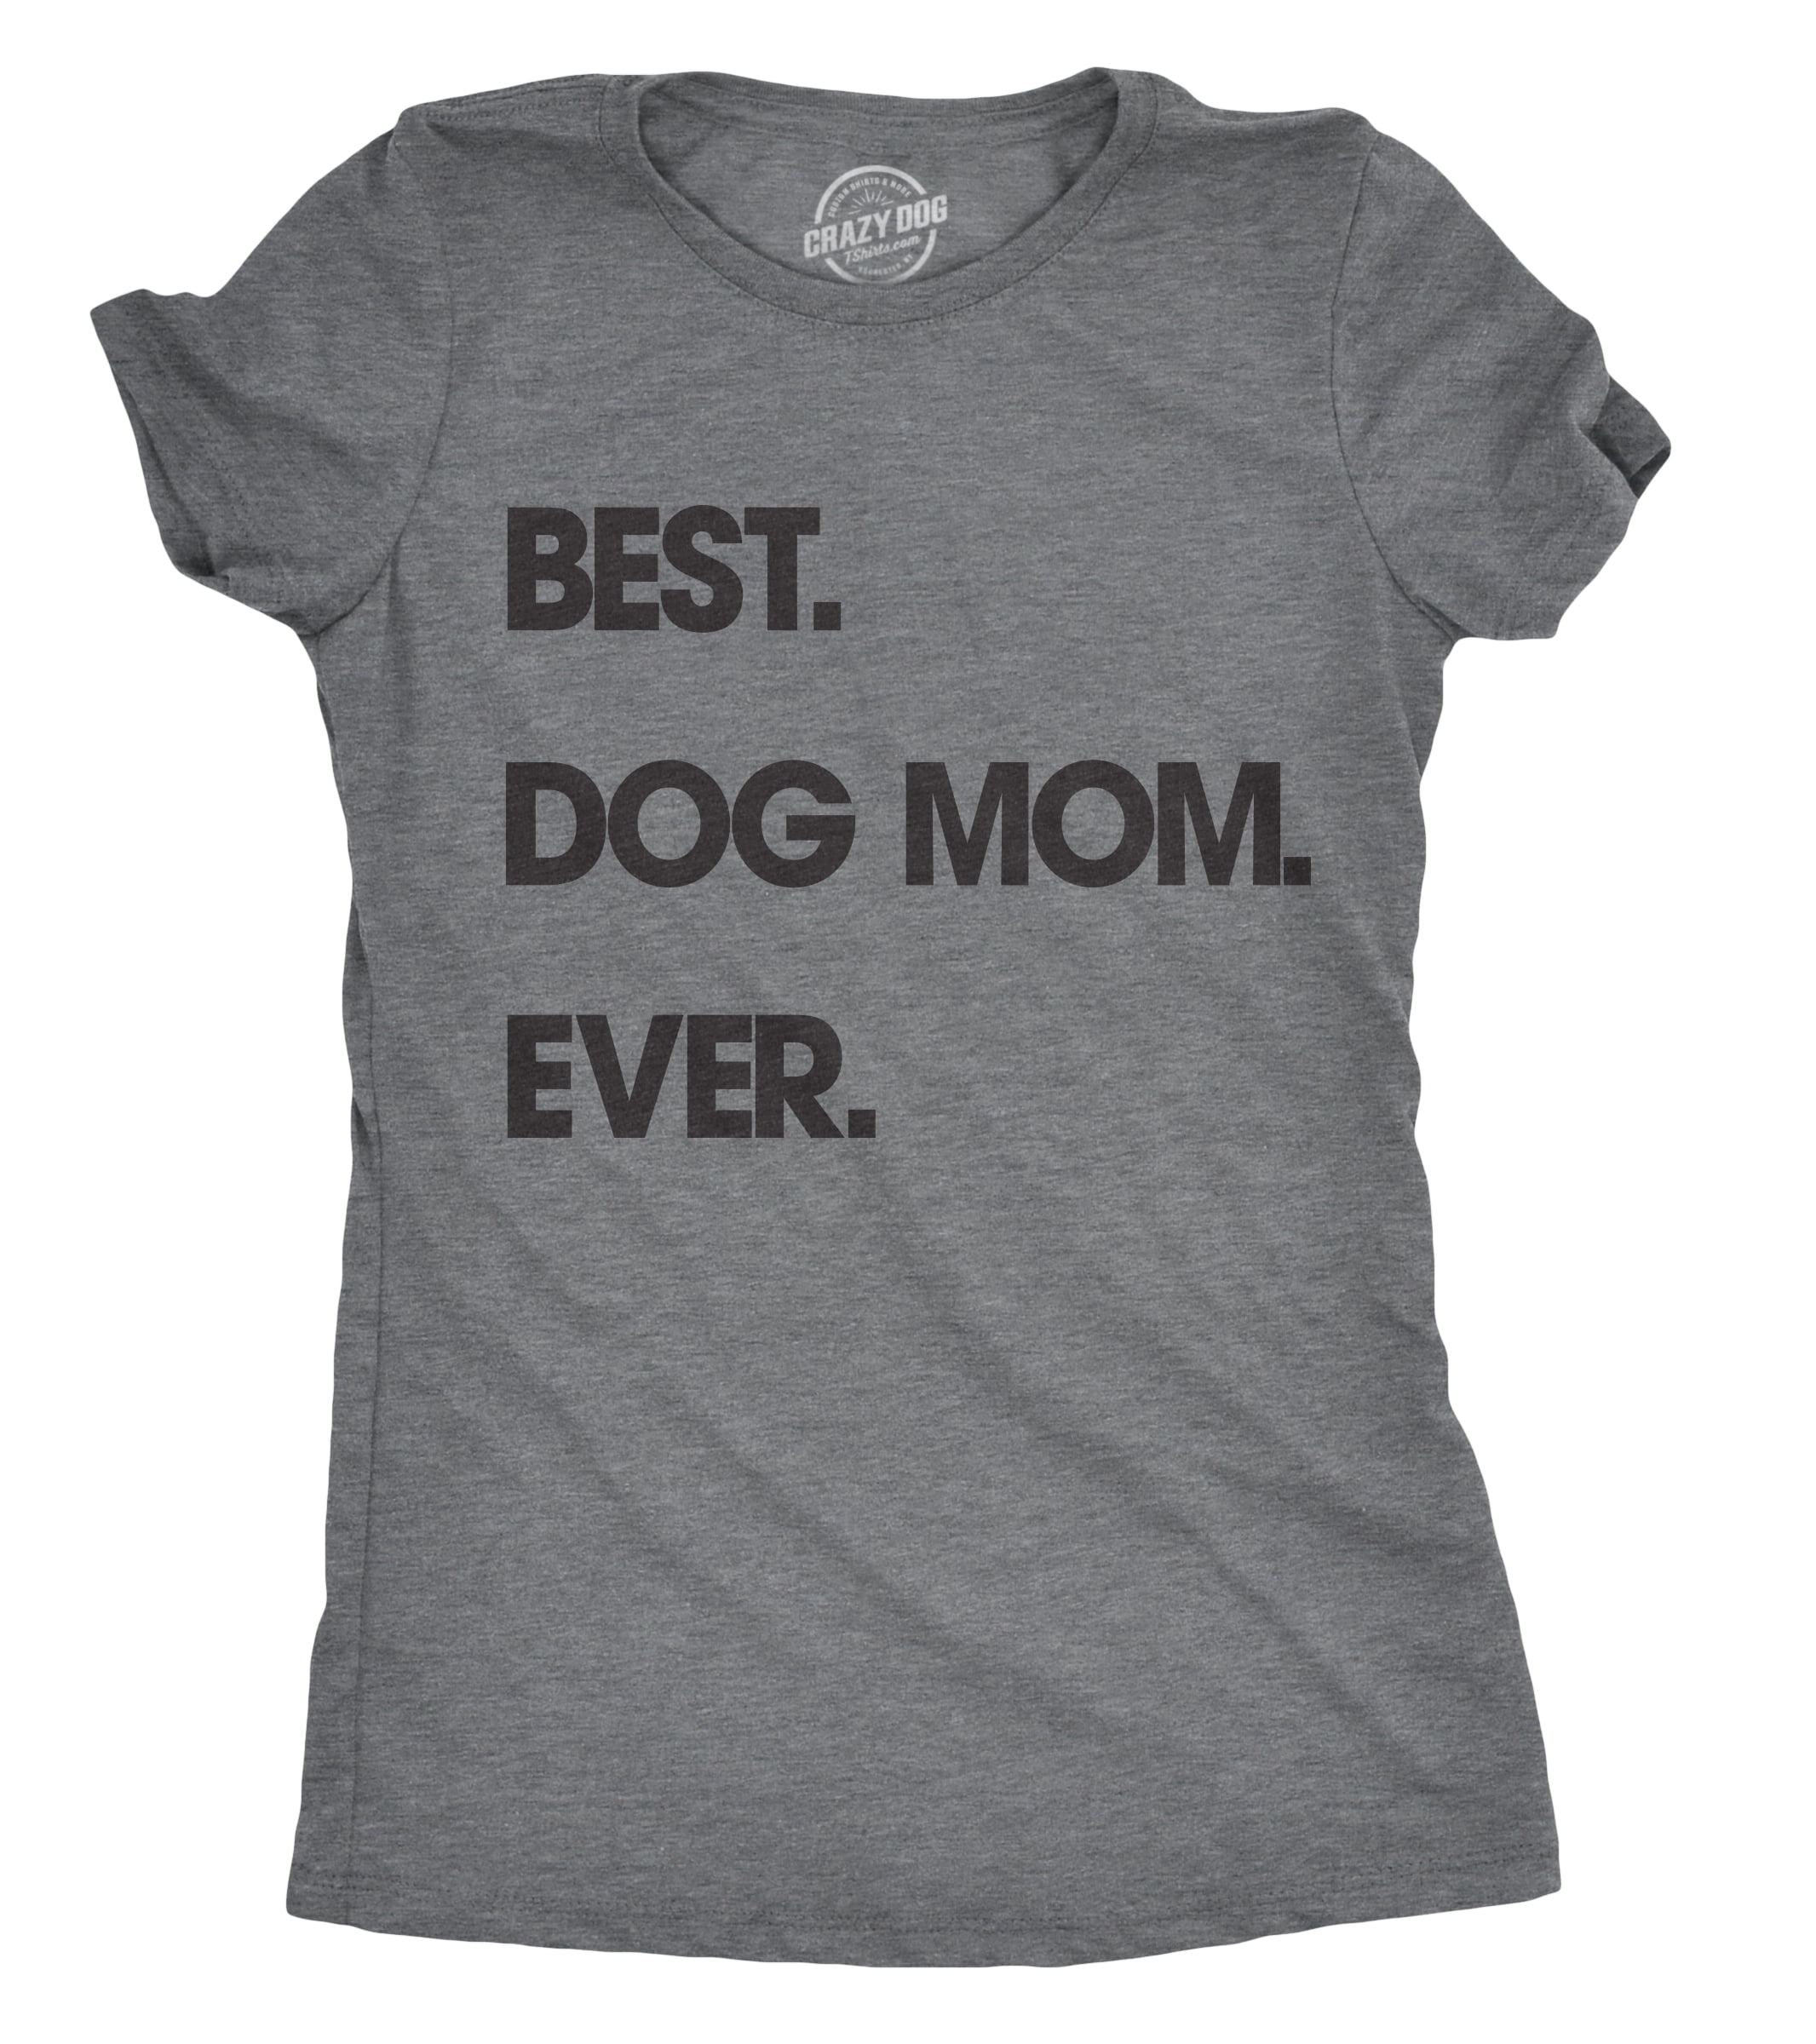 Iced Coffee and Dogs Shirt Dog Mom Tshirt Unisex Dog Mom T Shirt Dog Mom Shirt for Women Dog Mom Tee Dog Mom Gift Dog Mom T-Shirt